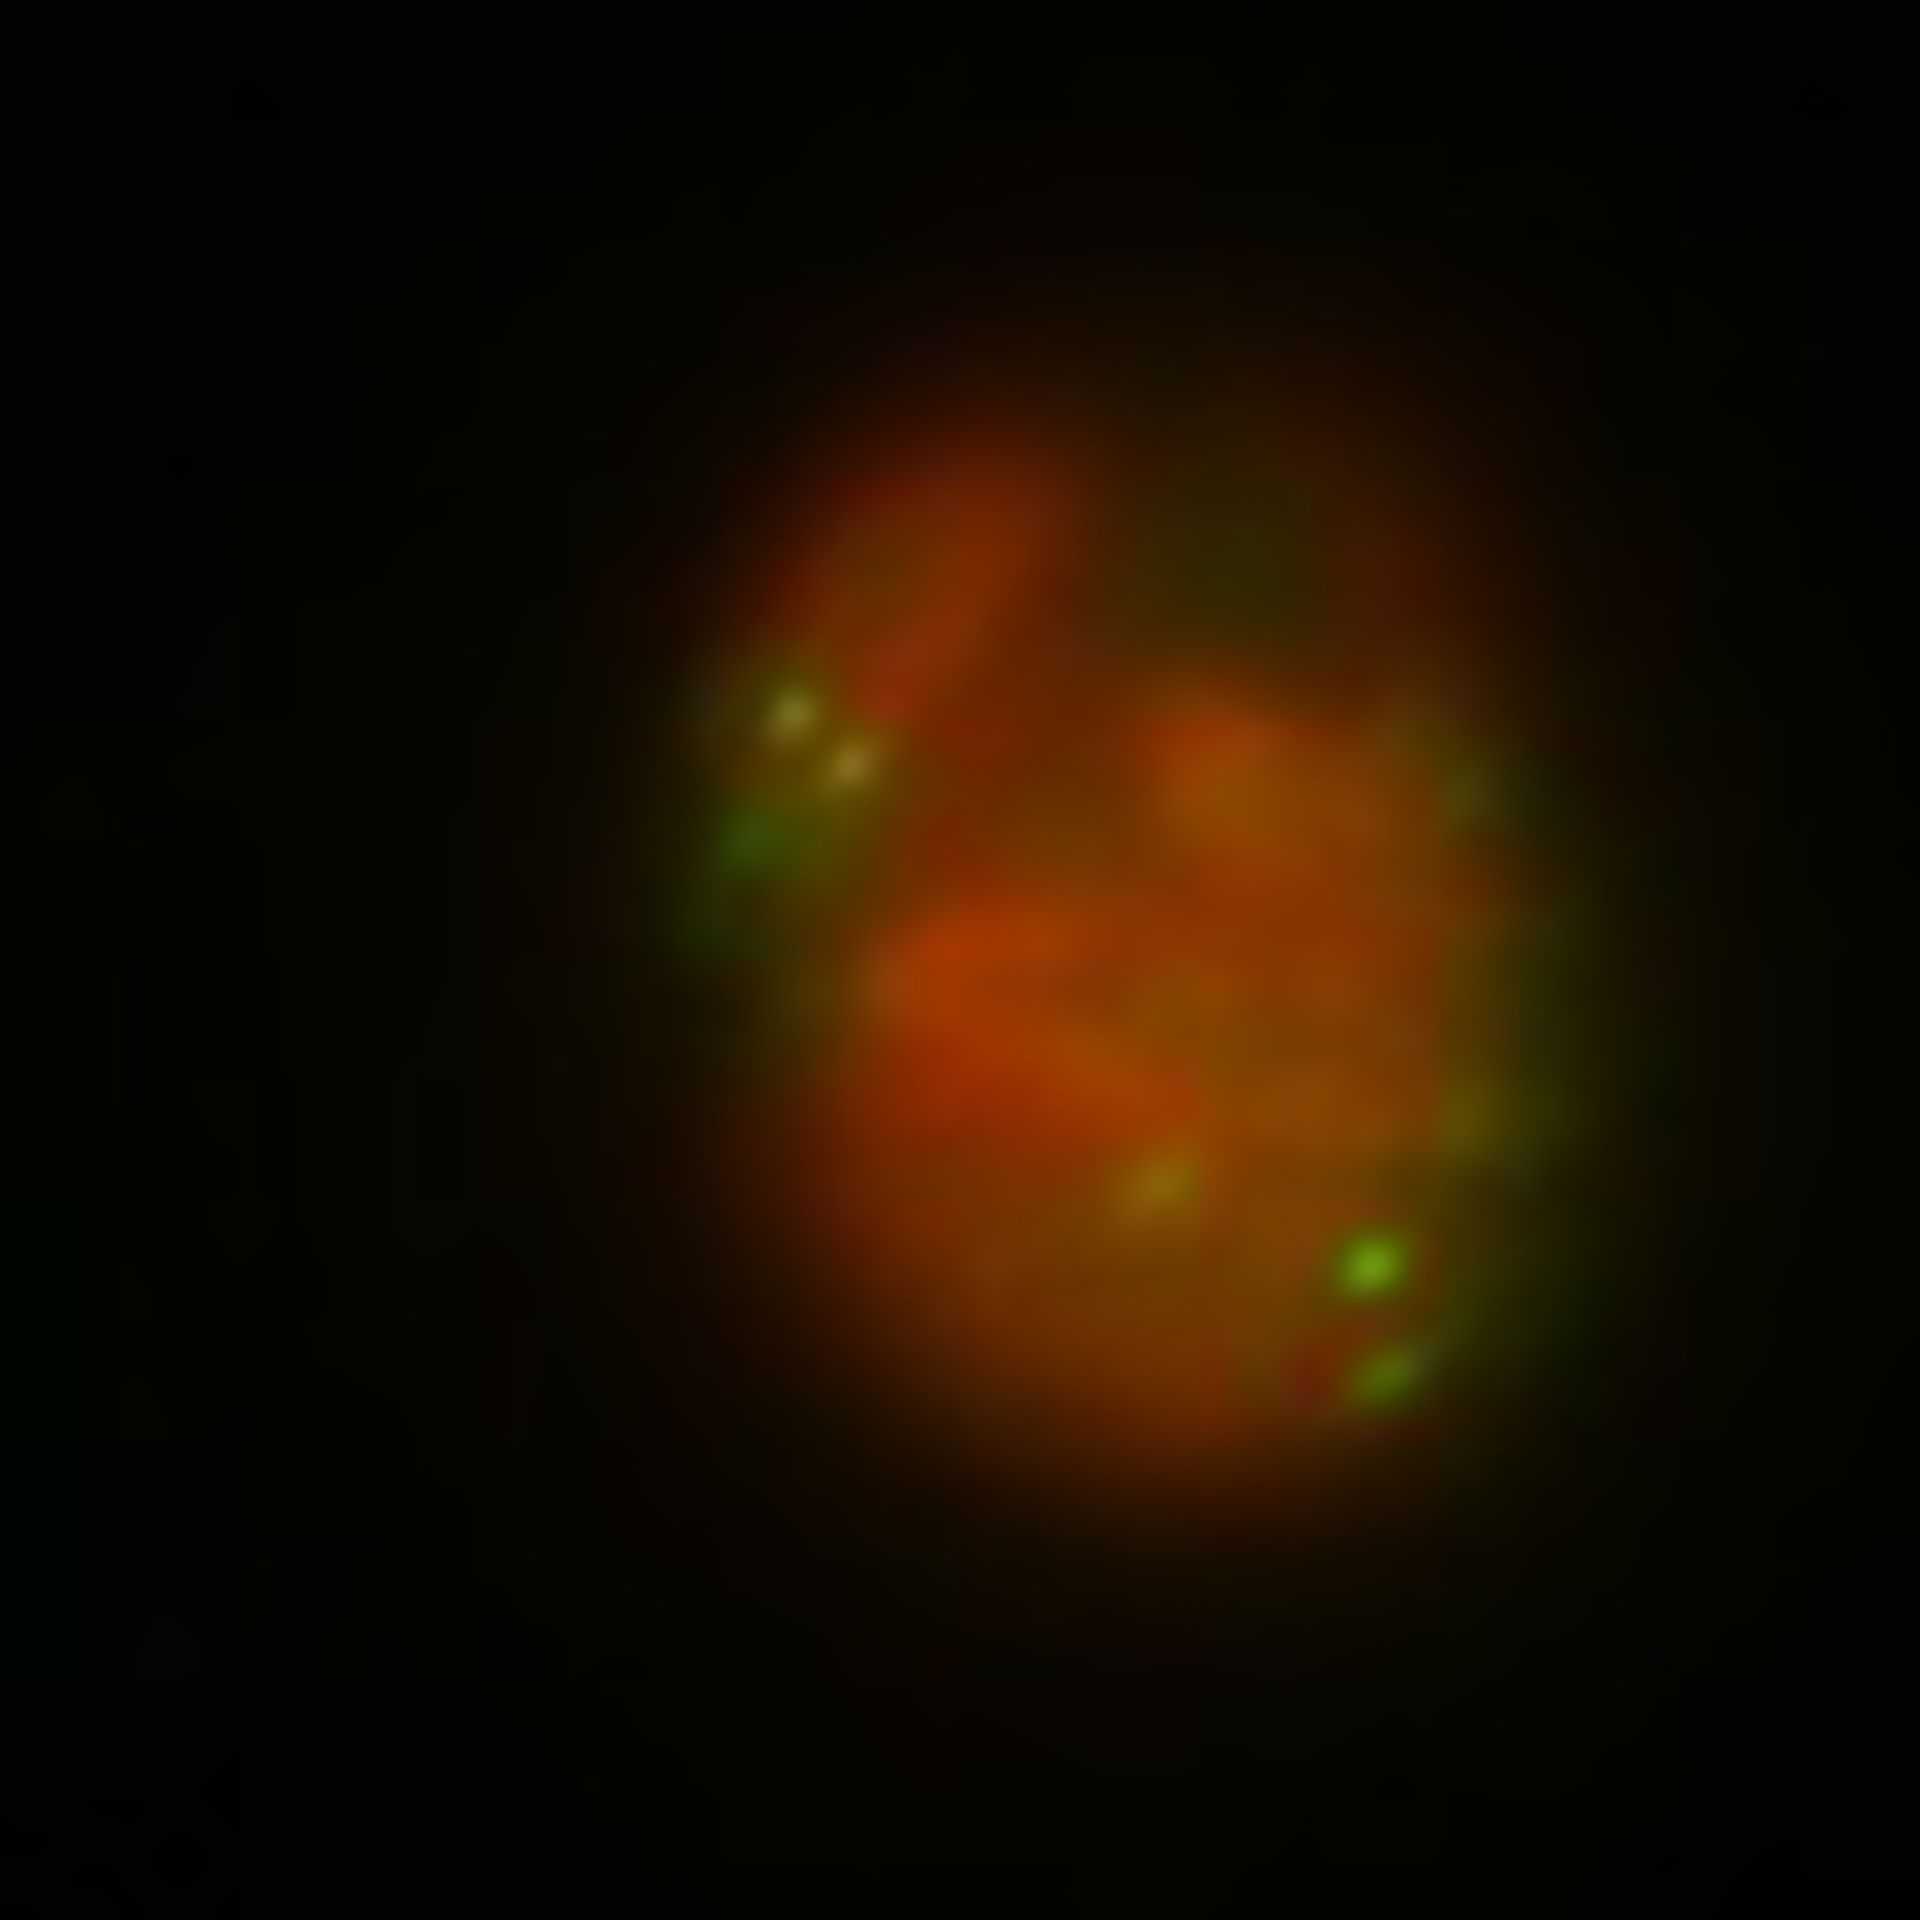 Toxoplasma gondii RH (Polar ring of apical complex) - CIL:10502